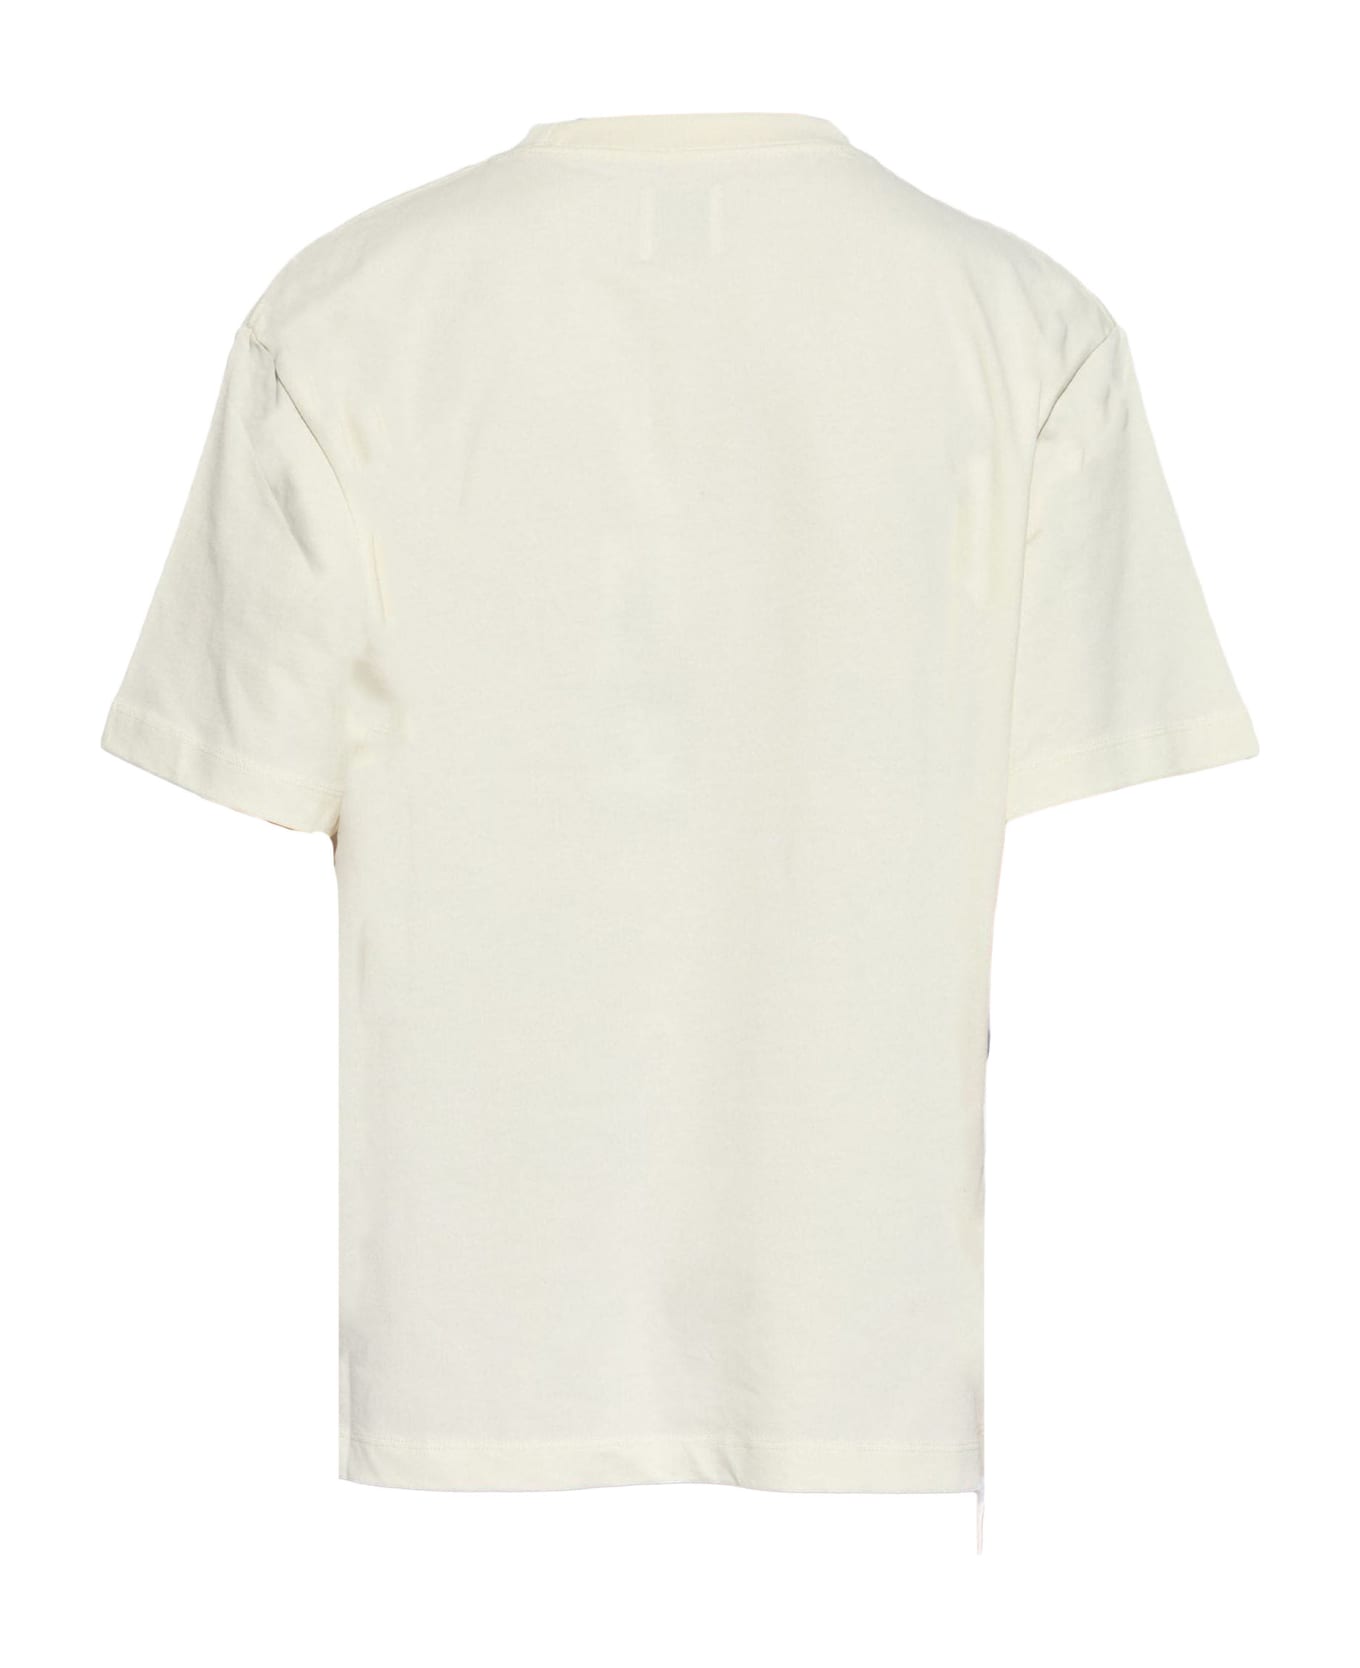 ROA Apparel T-shirts And Polos White - White